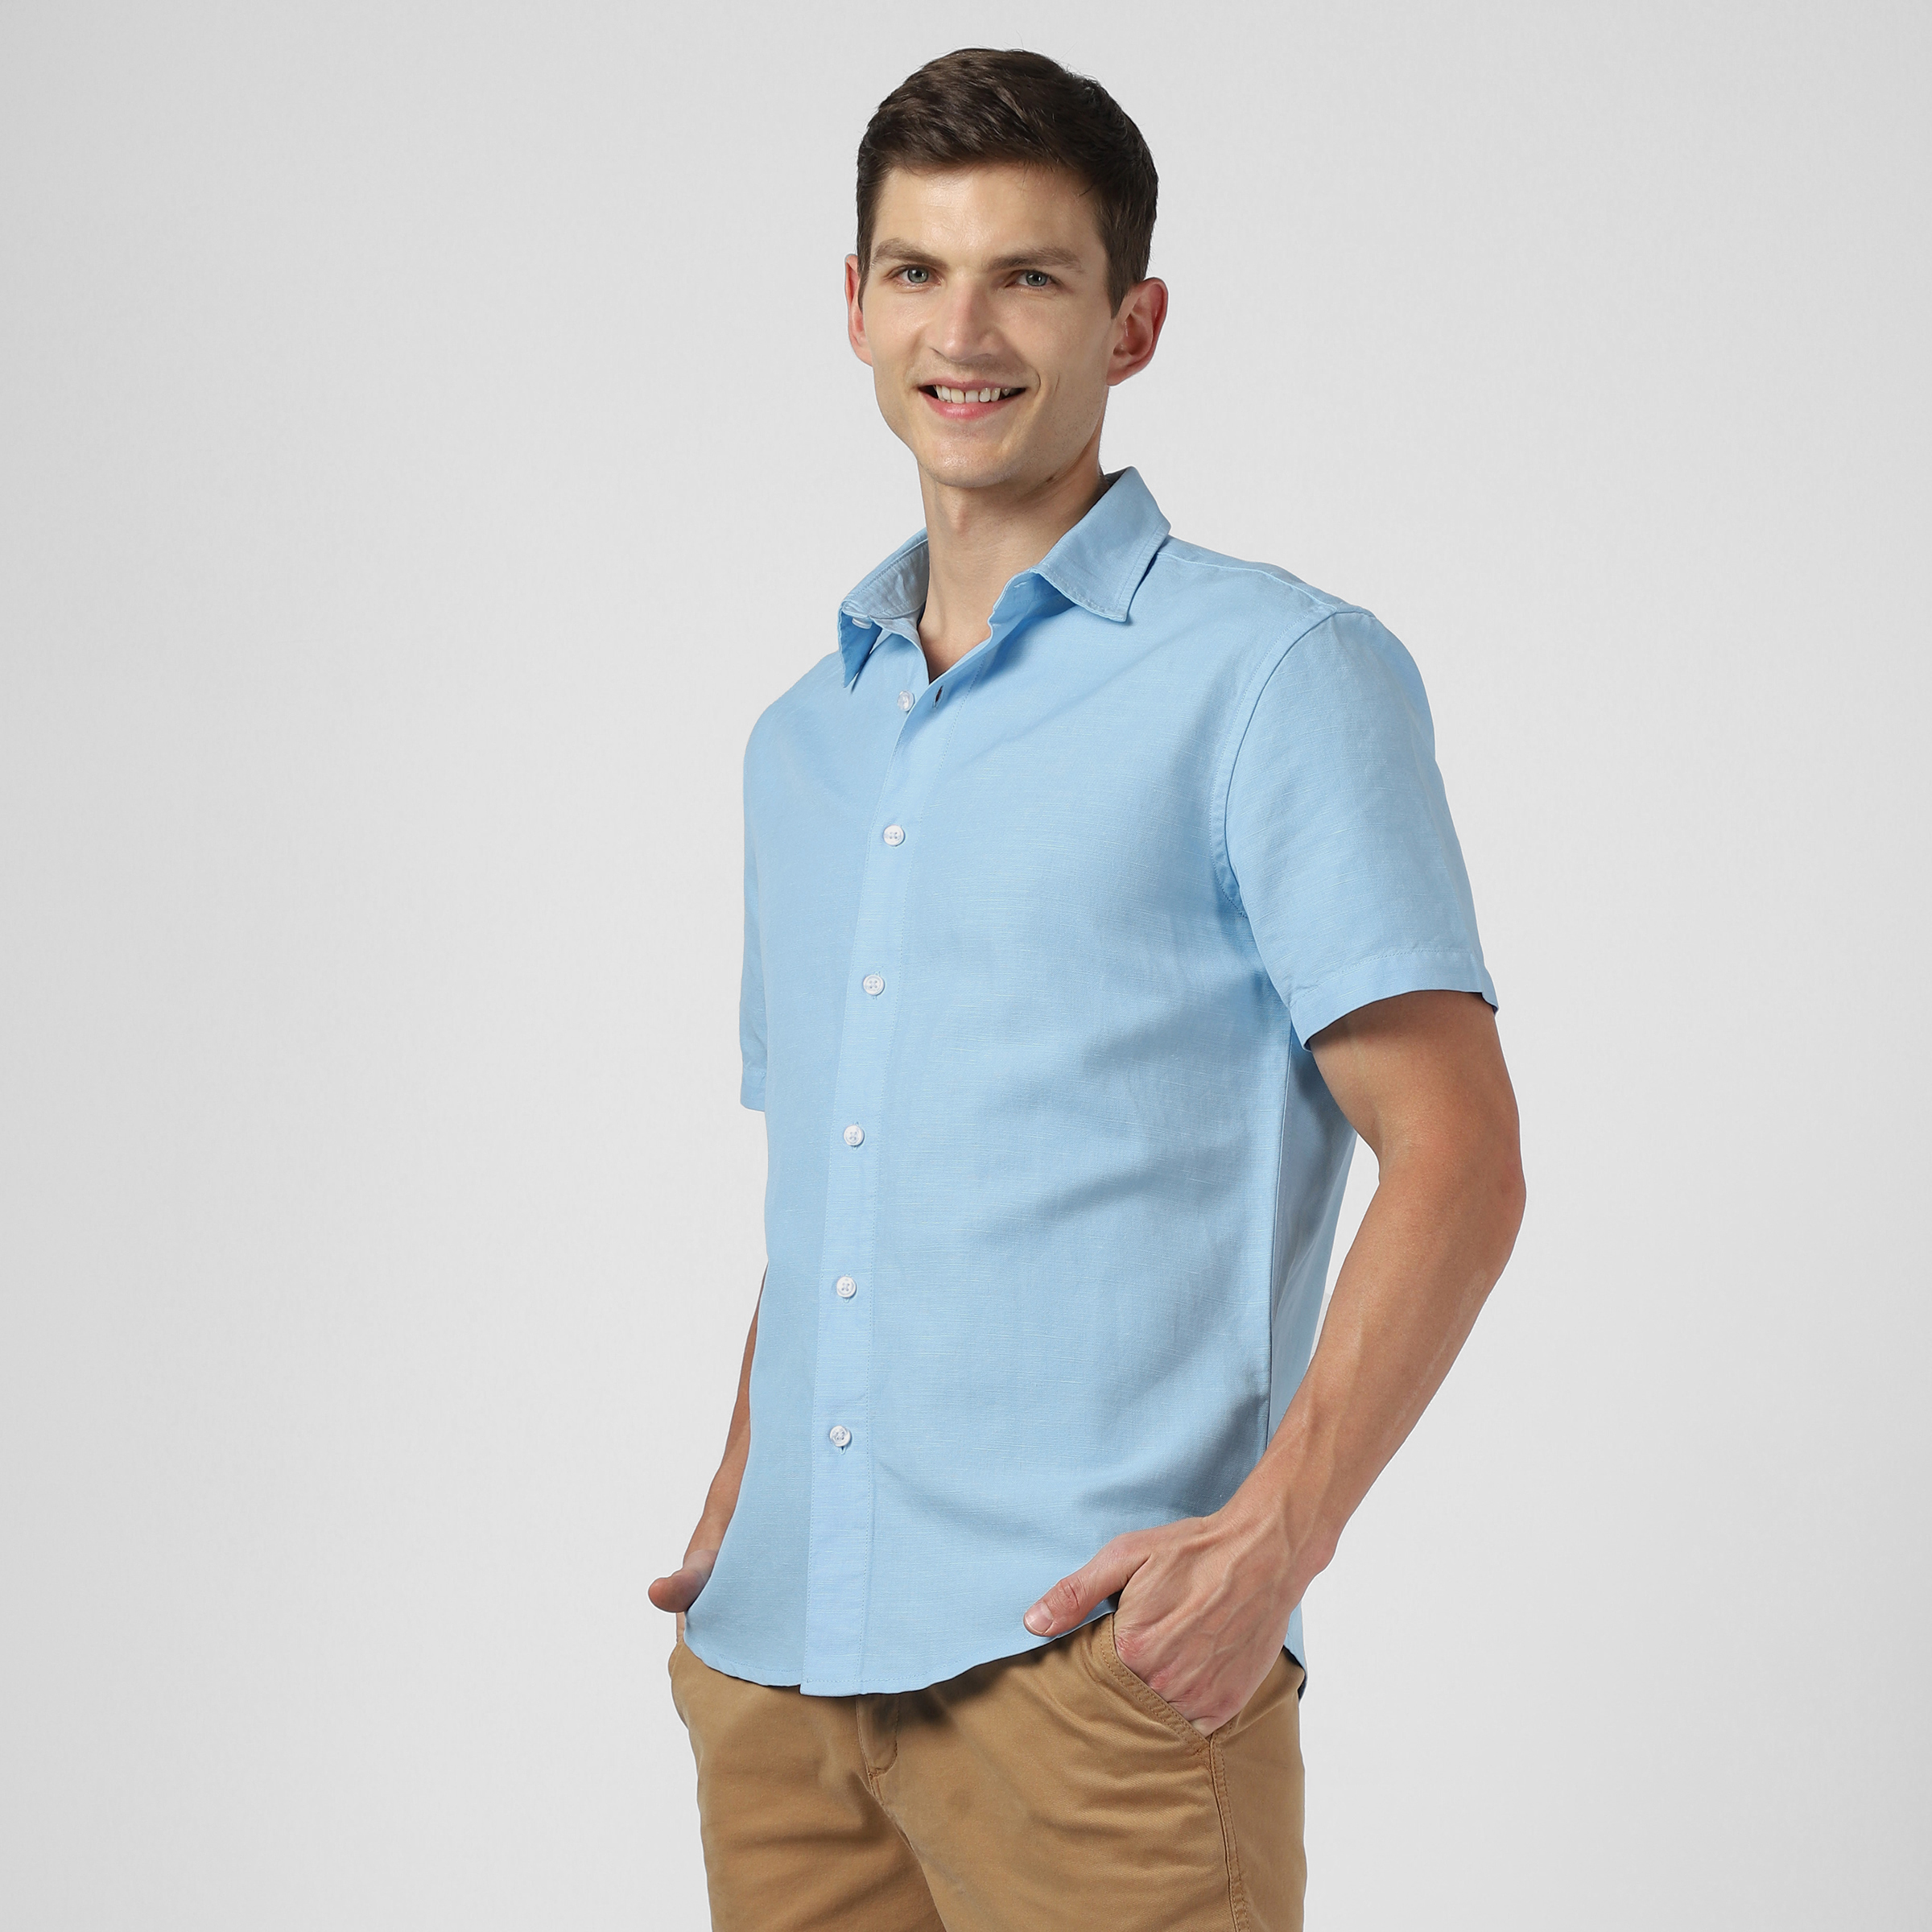 Retreat Linen Shirt Cool Blue right side on model